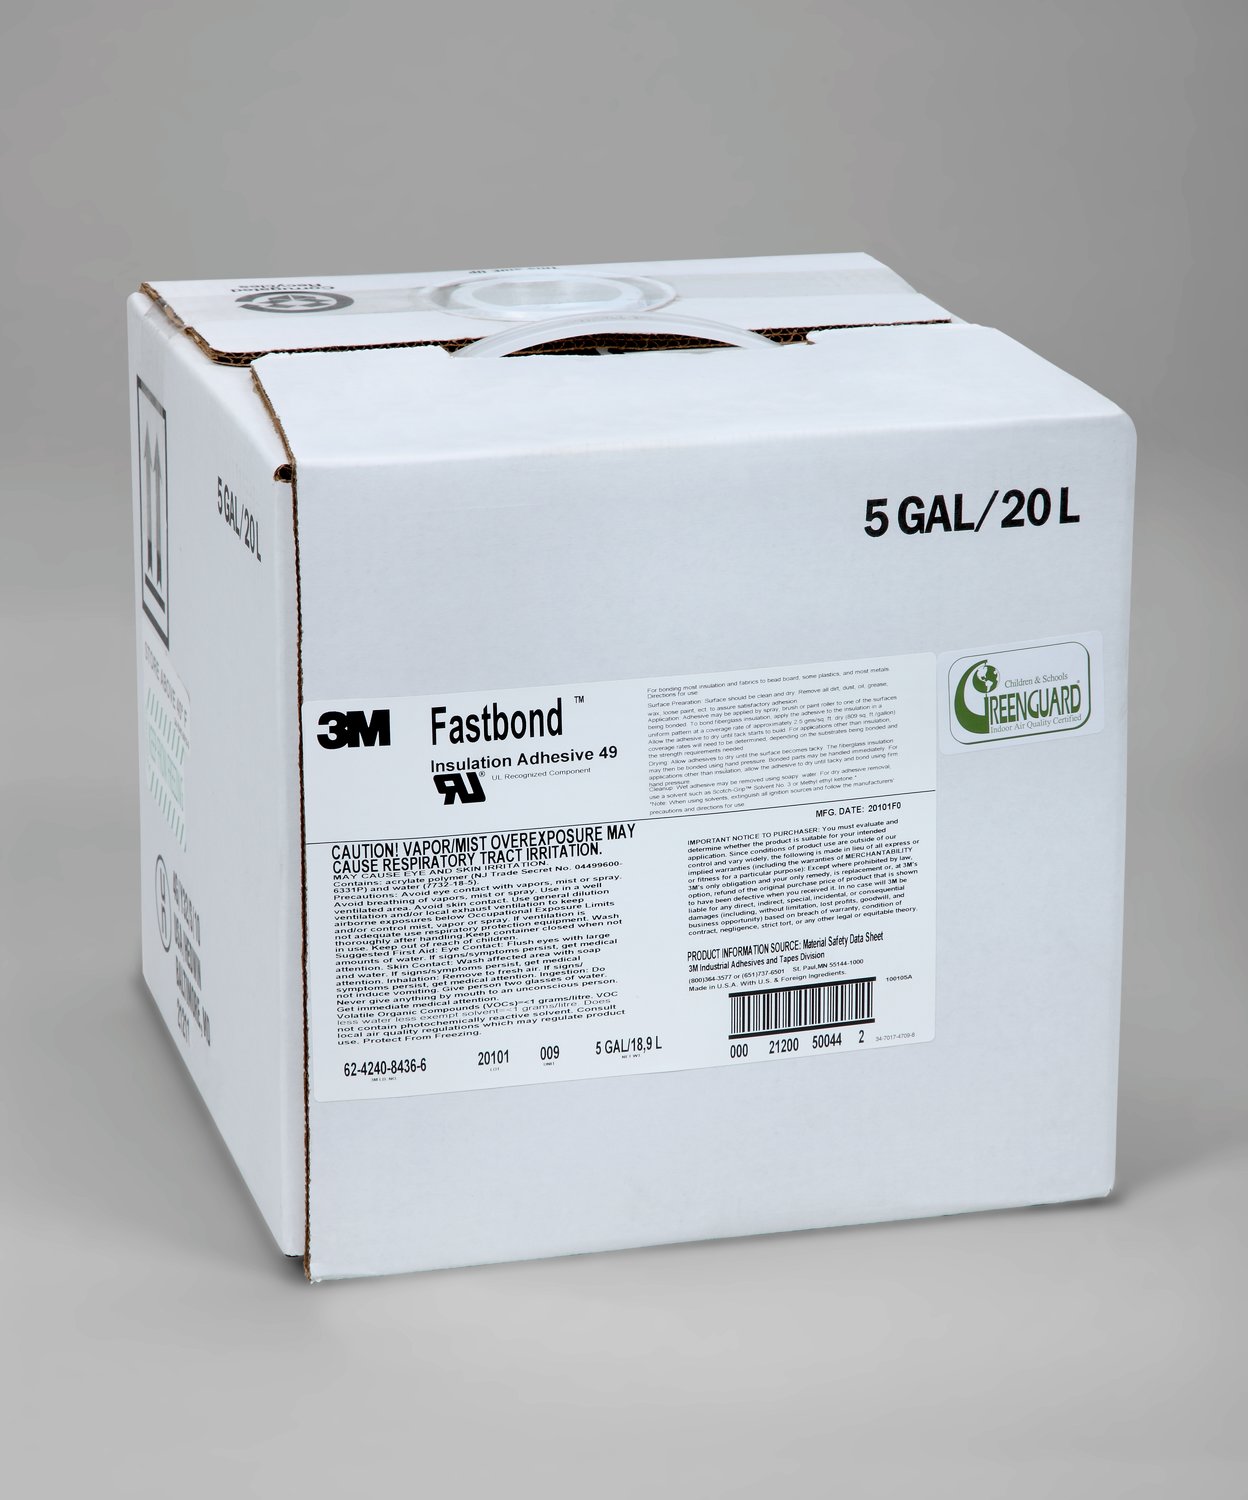 7010329770 - 3M Fastbond Insulation Adhesive 49, Clear, 5 Gallon Box